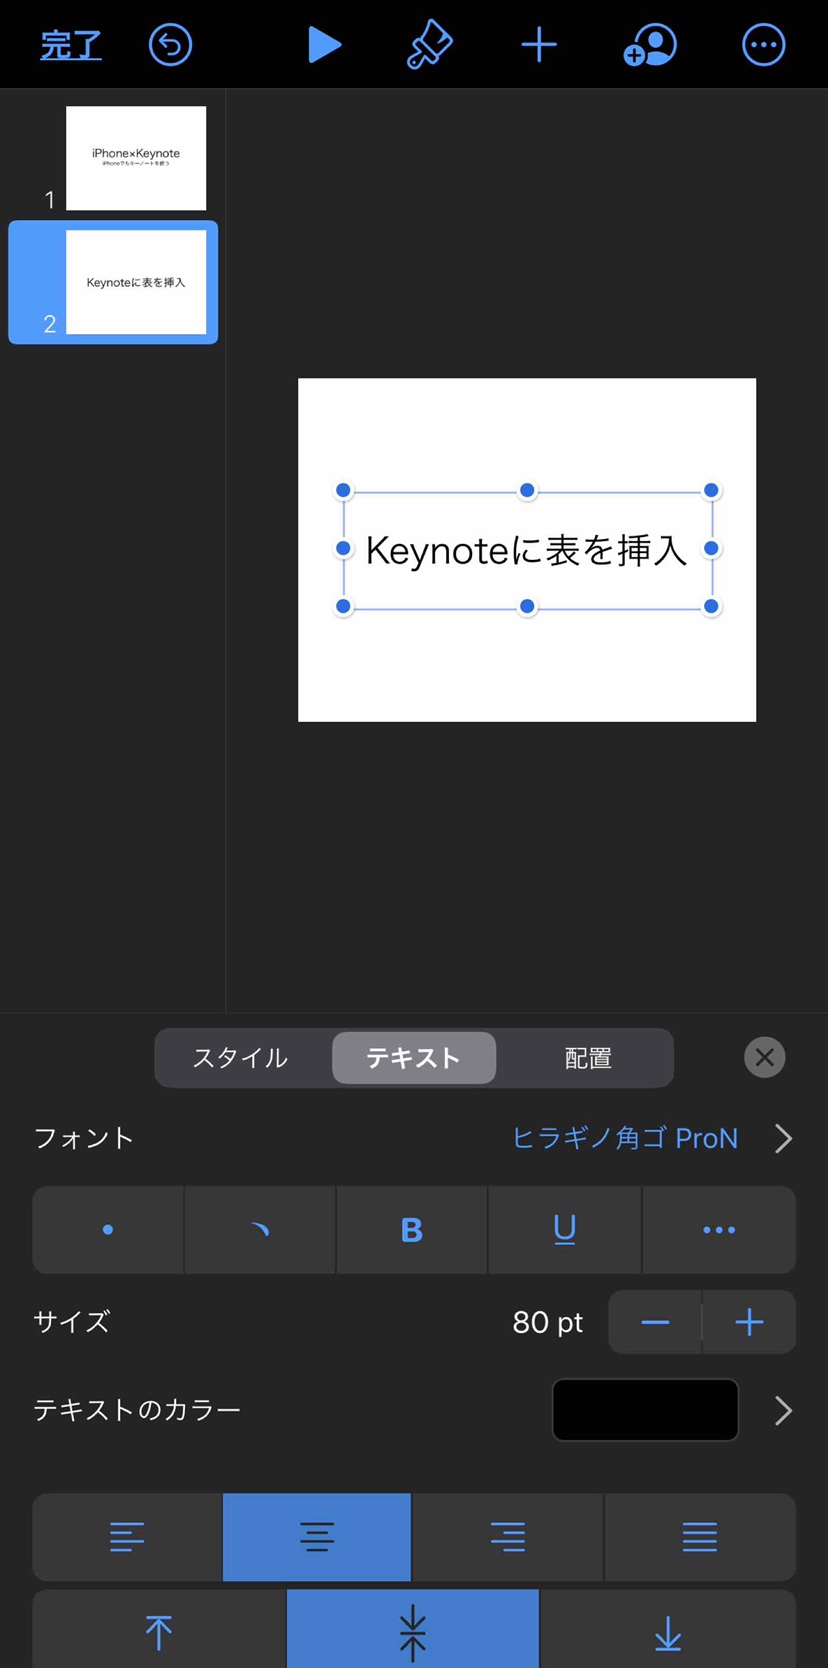 Iphone Keynote アイフォンでキーノートを使う方法解説します Kunyotsu Log